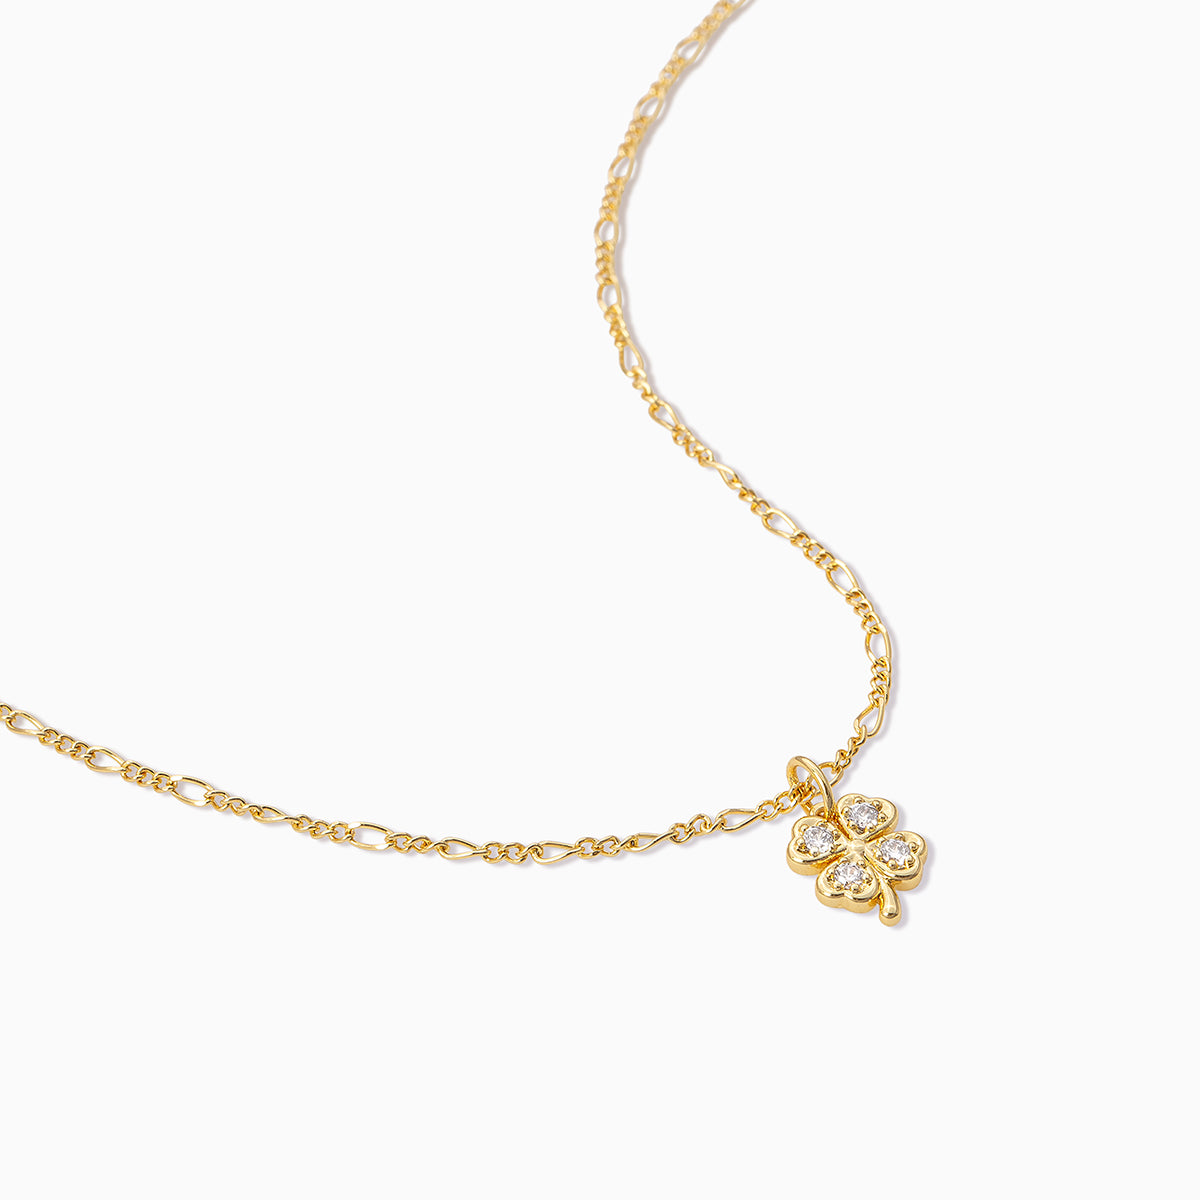 Four Leaf Clover Necklace | Gold | Product Detail Image | Uncommon James